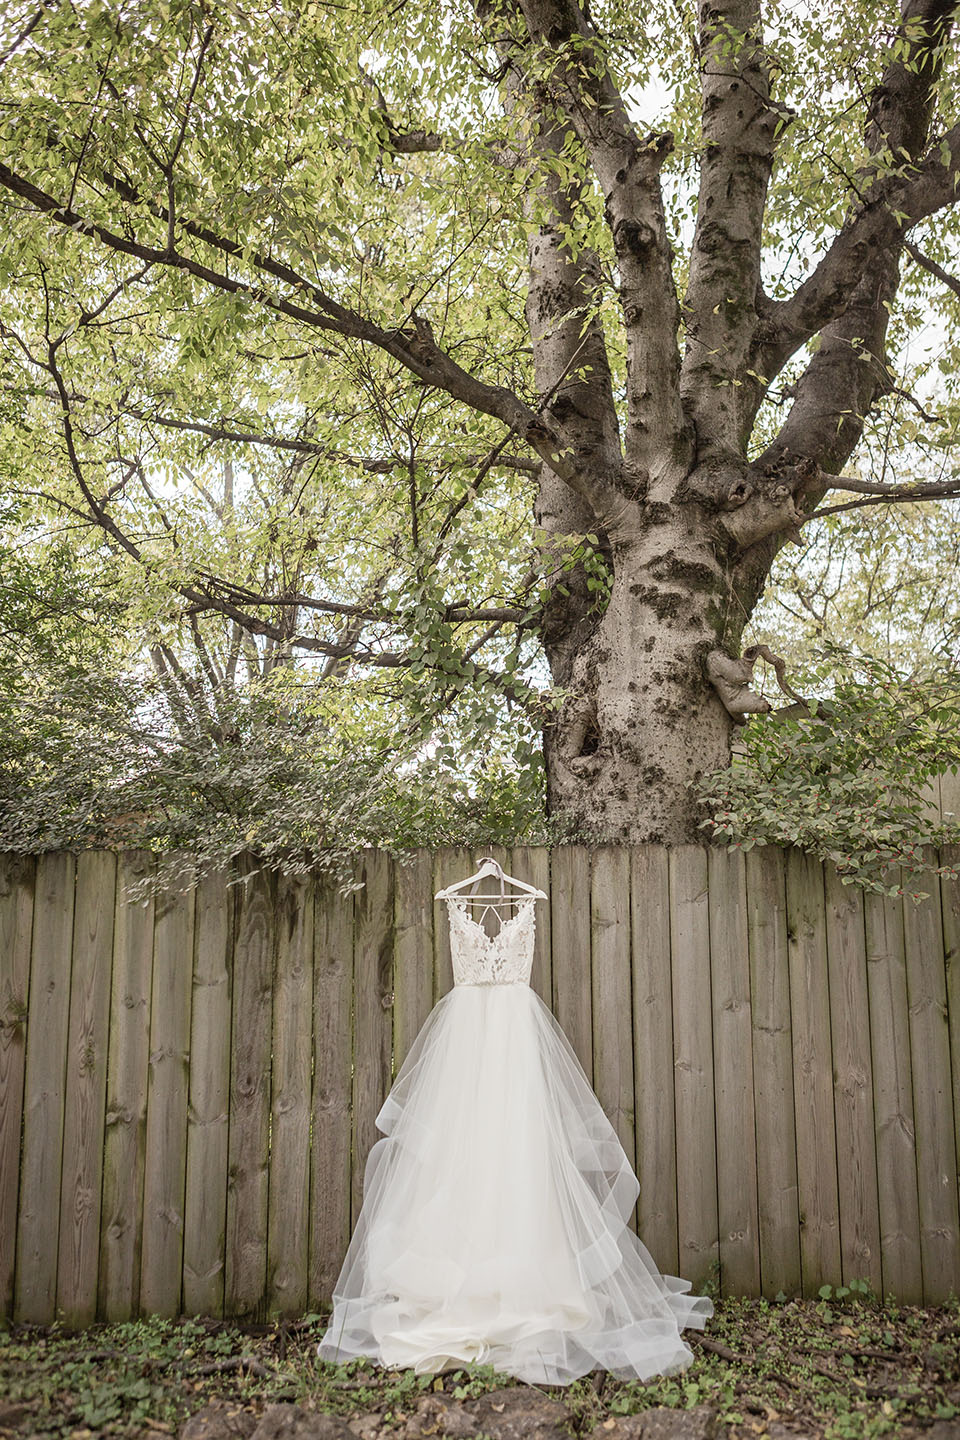 Wedding Dress Hanging on Fence